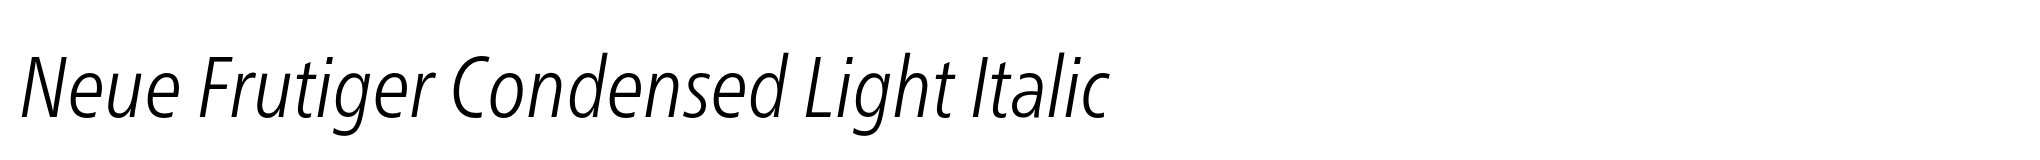 Neue Frutiger Condensed Light Italic image